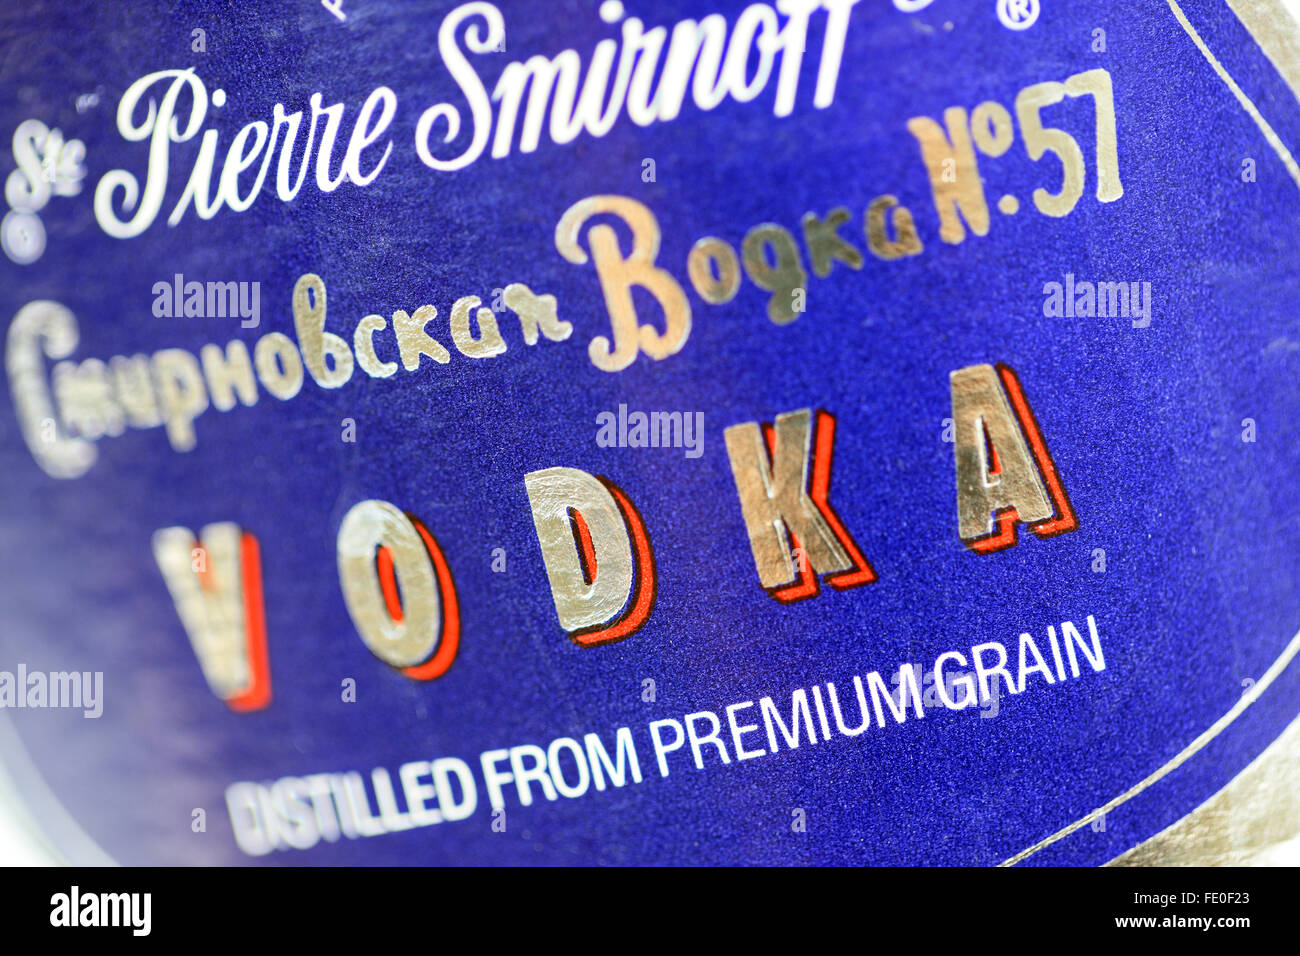 Smirnoff Blue label vodka Stock Photo - Alamy